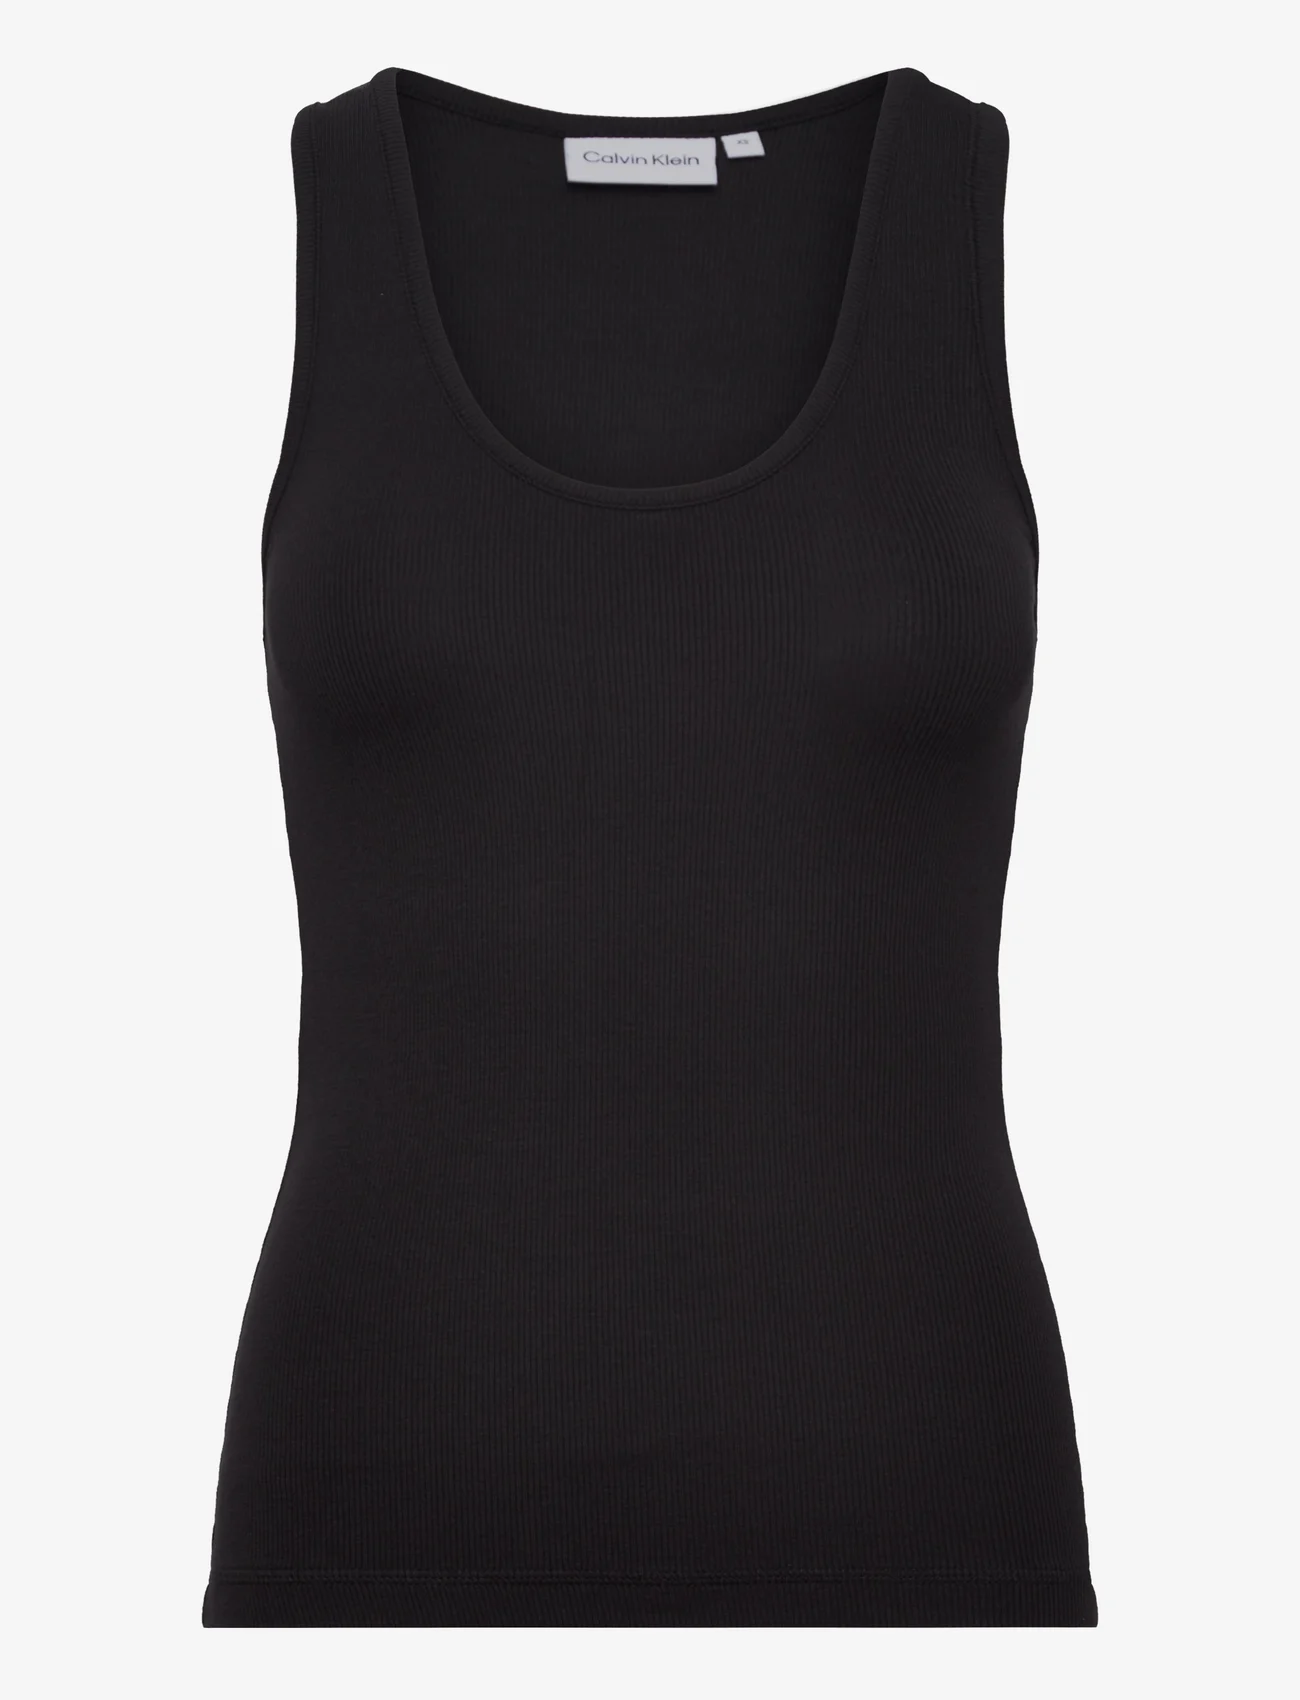 Calvin Klein - MODAL RIB TANK - sleeveless tops - ck black - 0